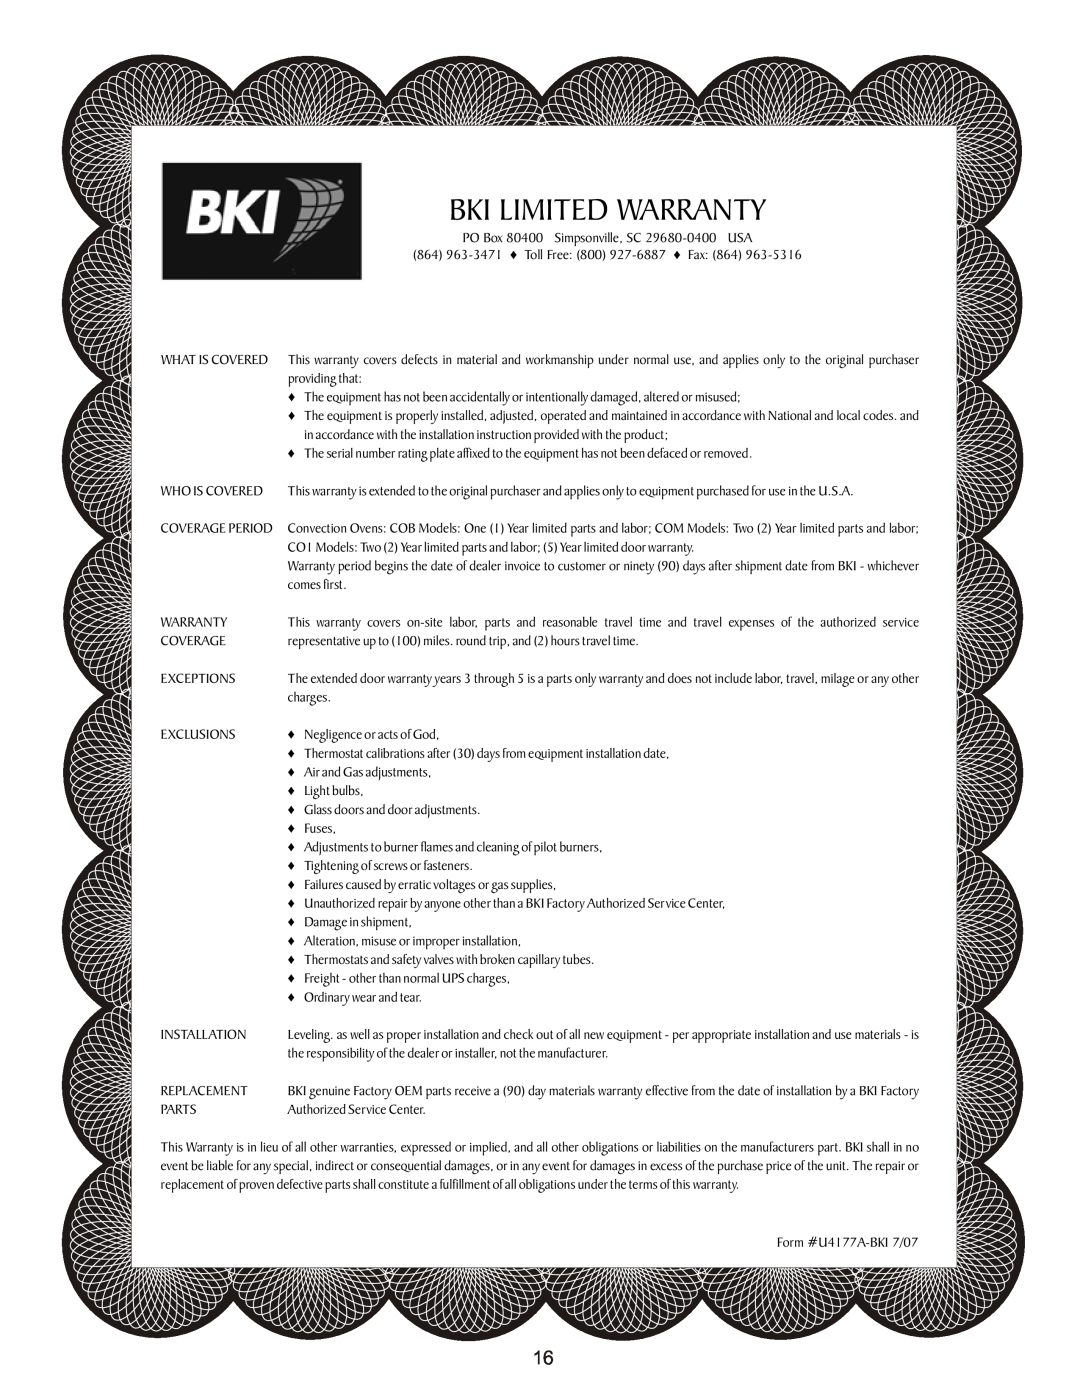 Bakers Pride Oven CB-MVPWDS manual Bki Limited Warranty 